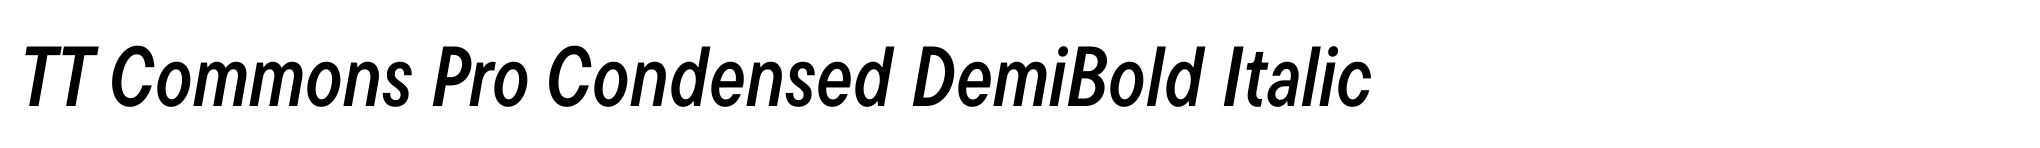 TT Commons Pro Condensed DemiBold Italic image